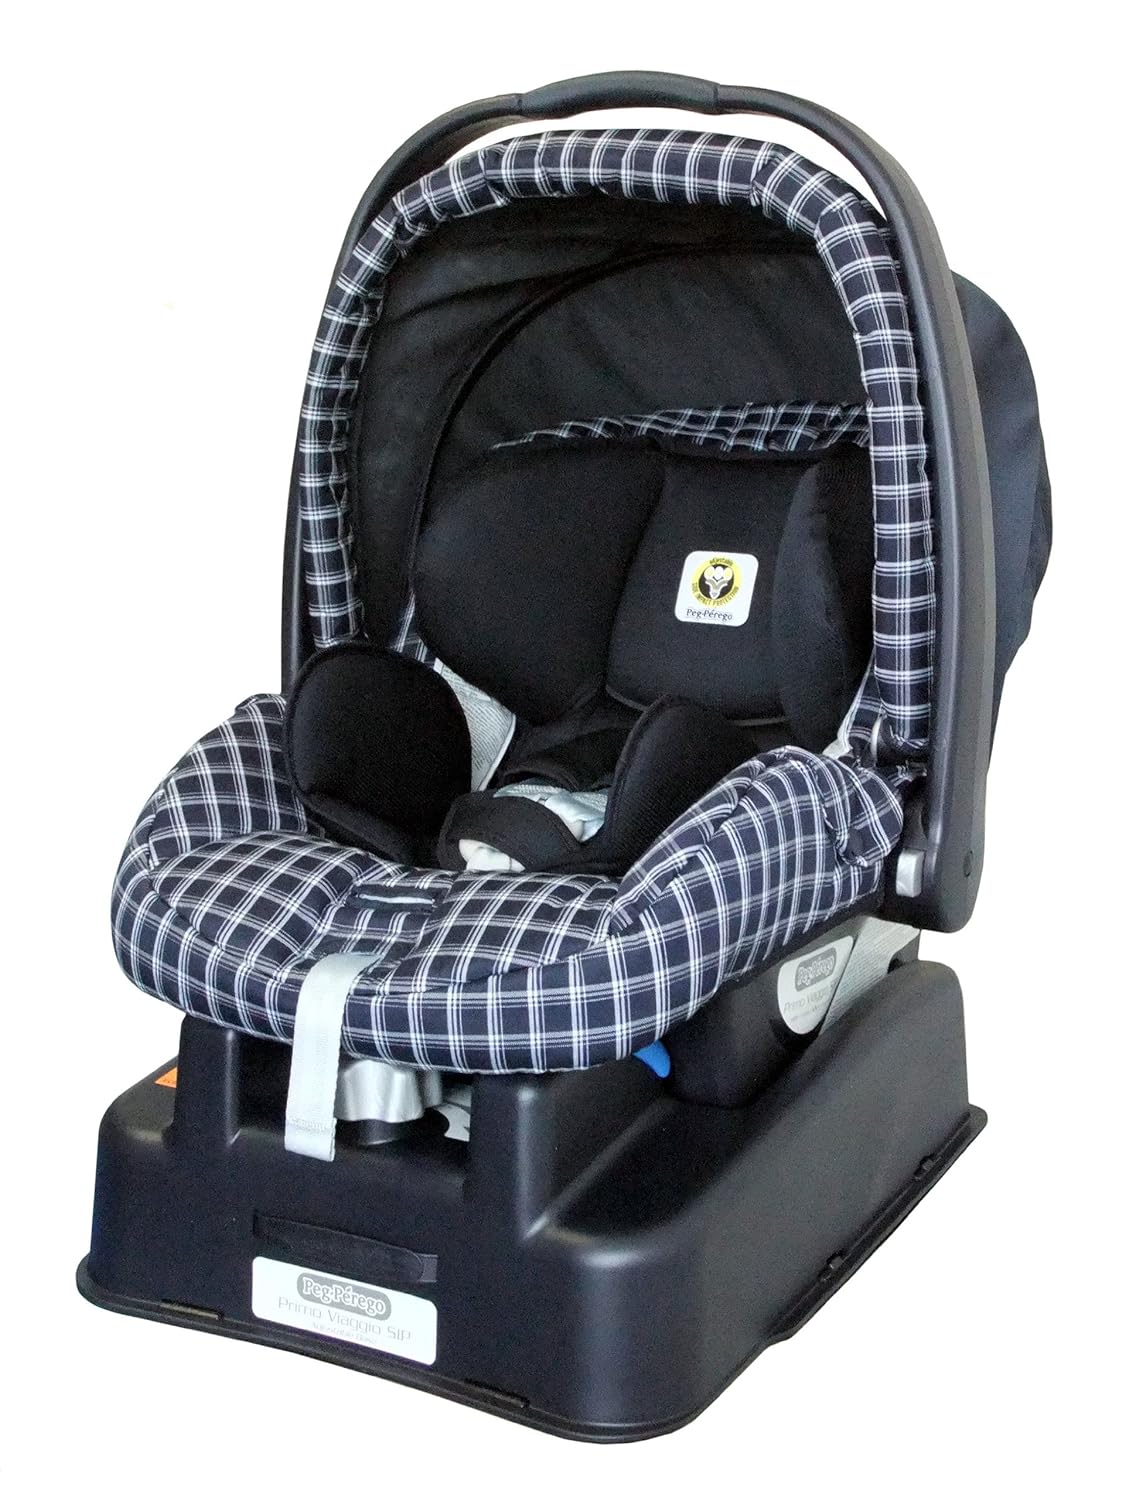 Peg Perego Primo Viaggio SIP Child Car Seat with Adjustable Base Bluvela Design